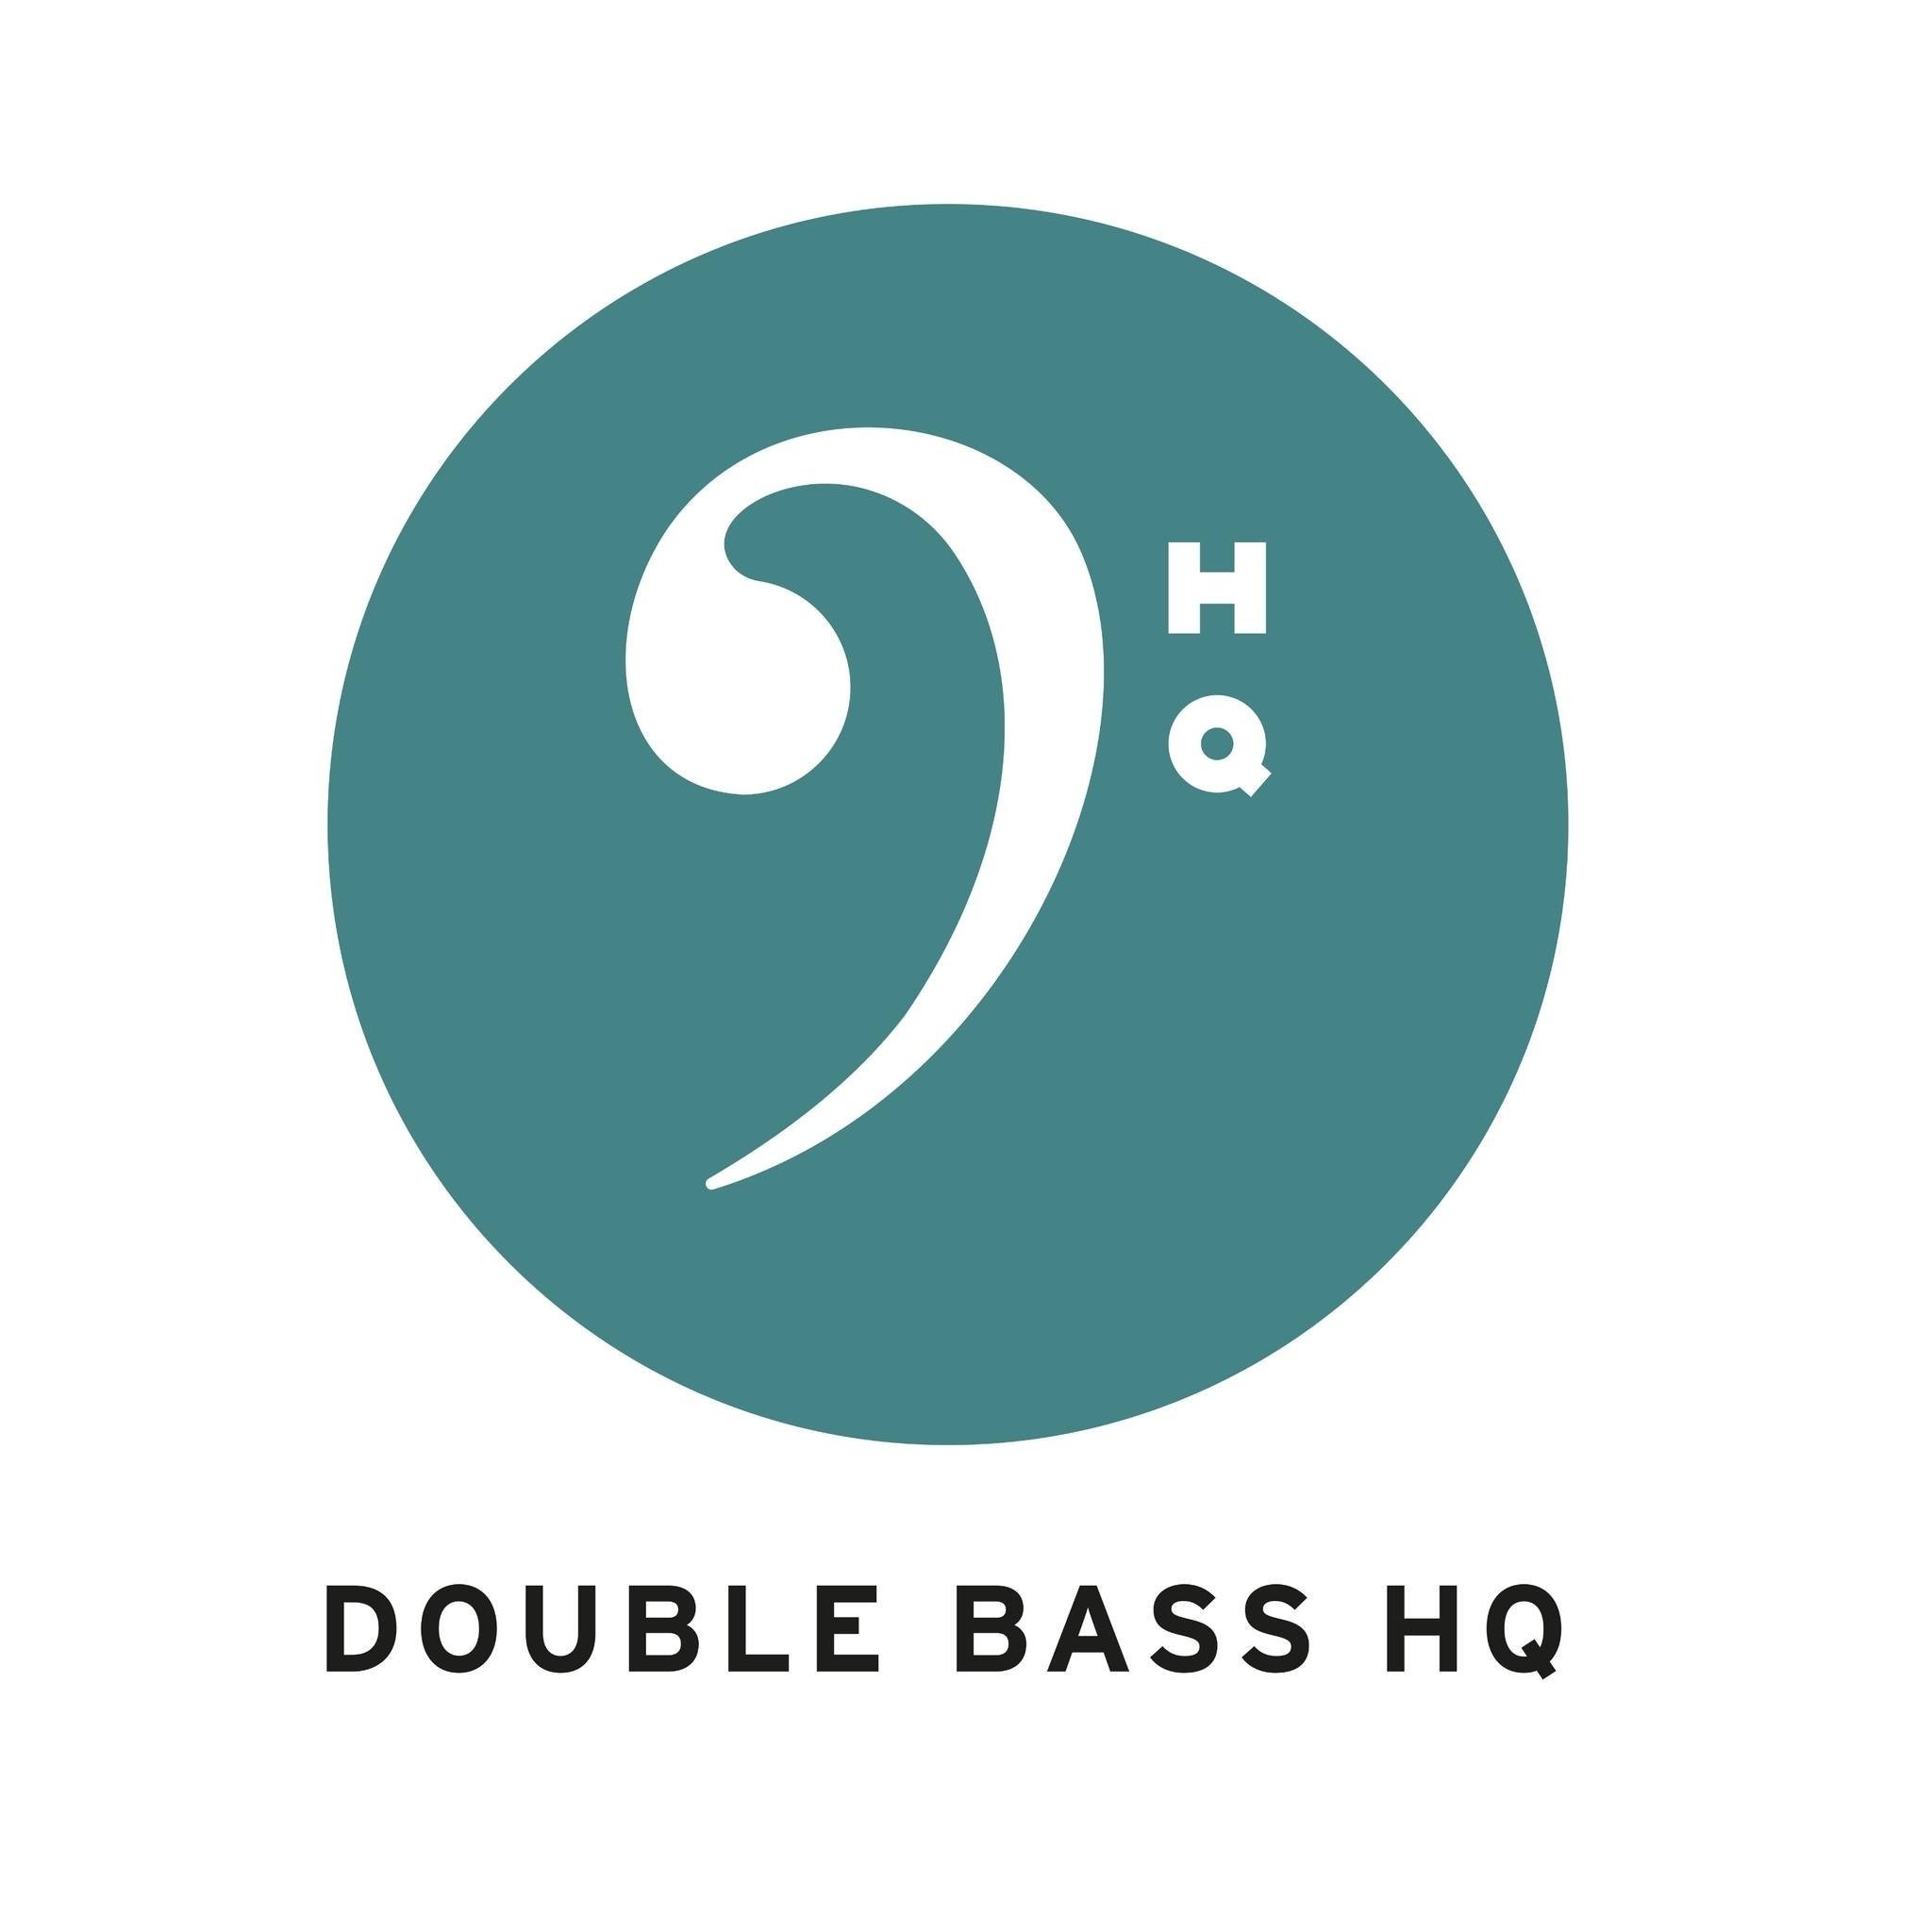 Double Bass HQ Newsletter